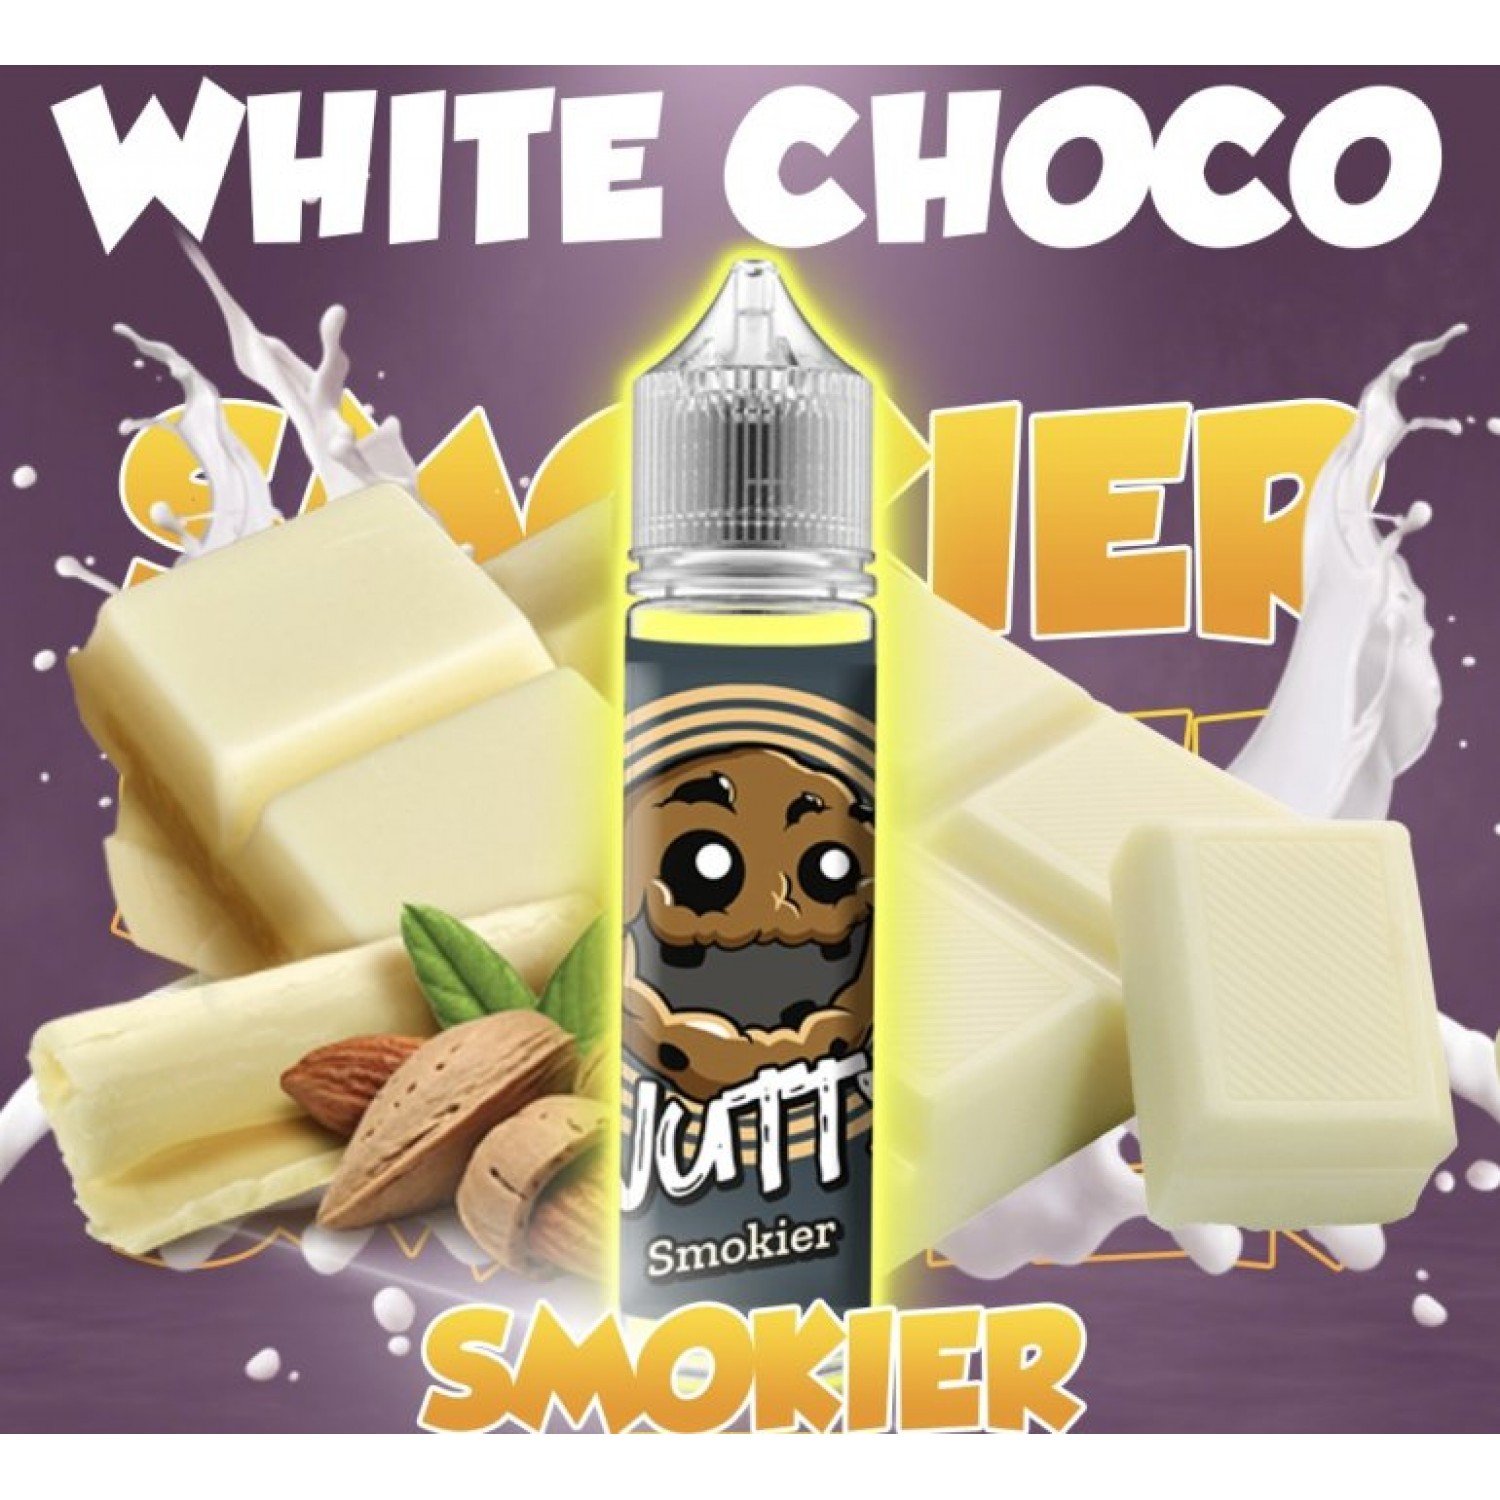 Smokier - White Choco 60 ml Premium Likit